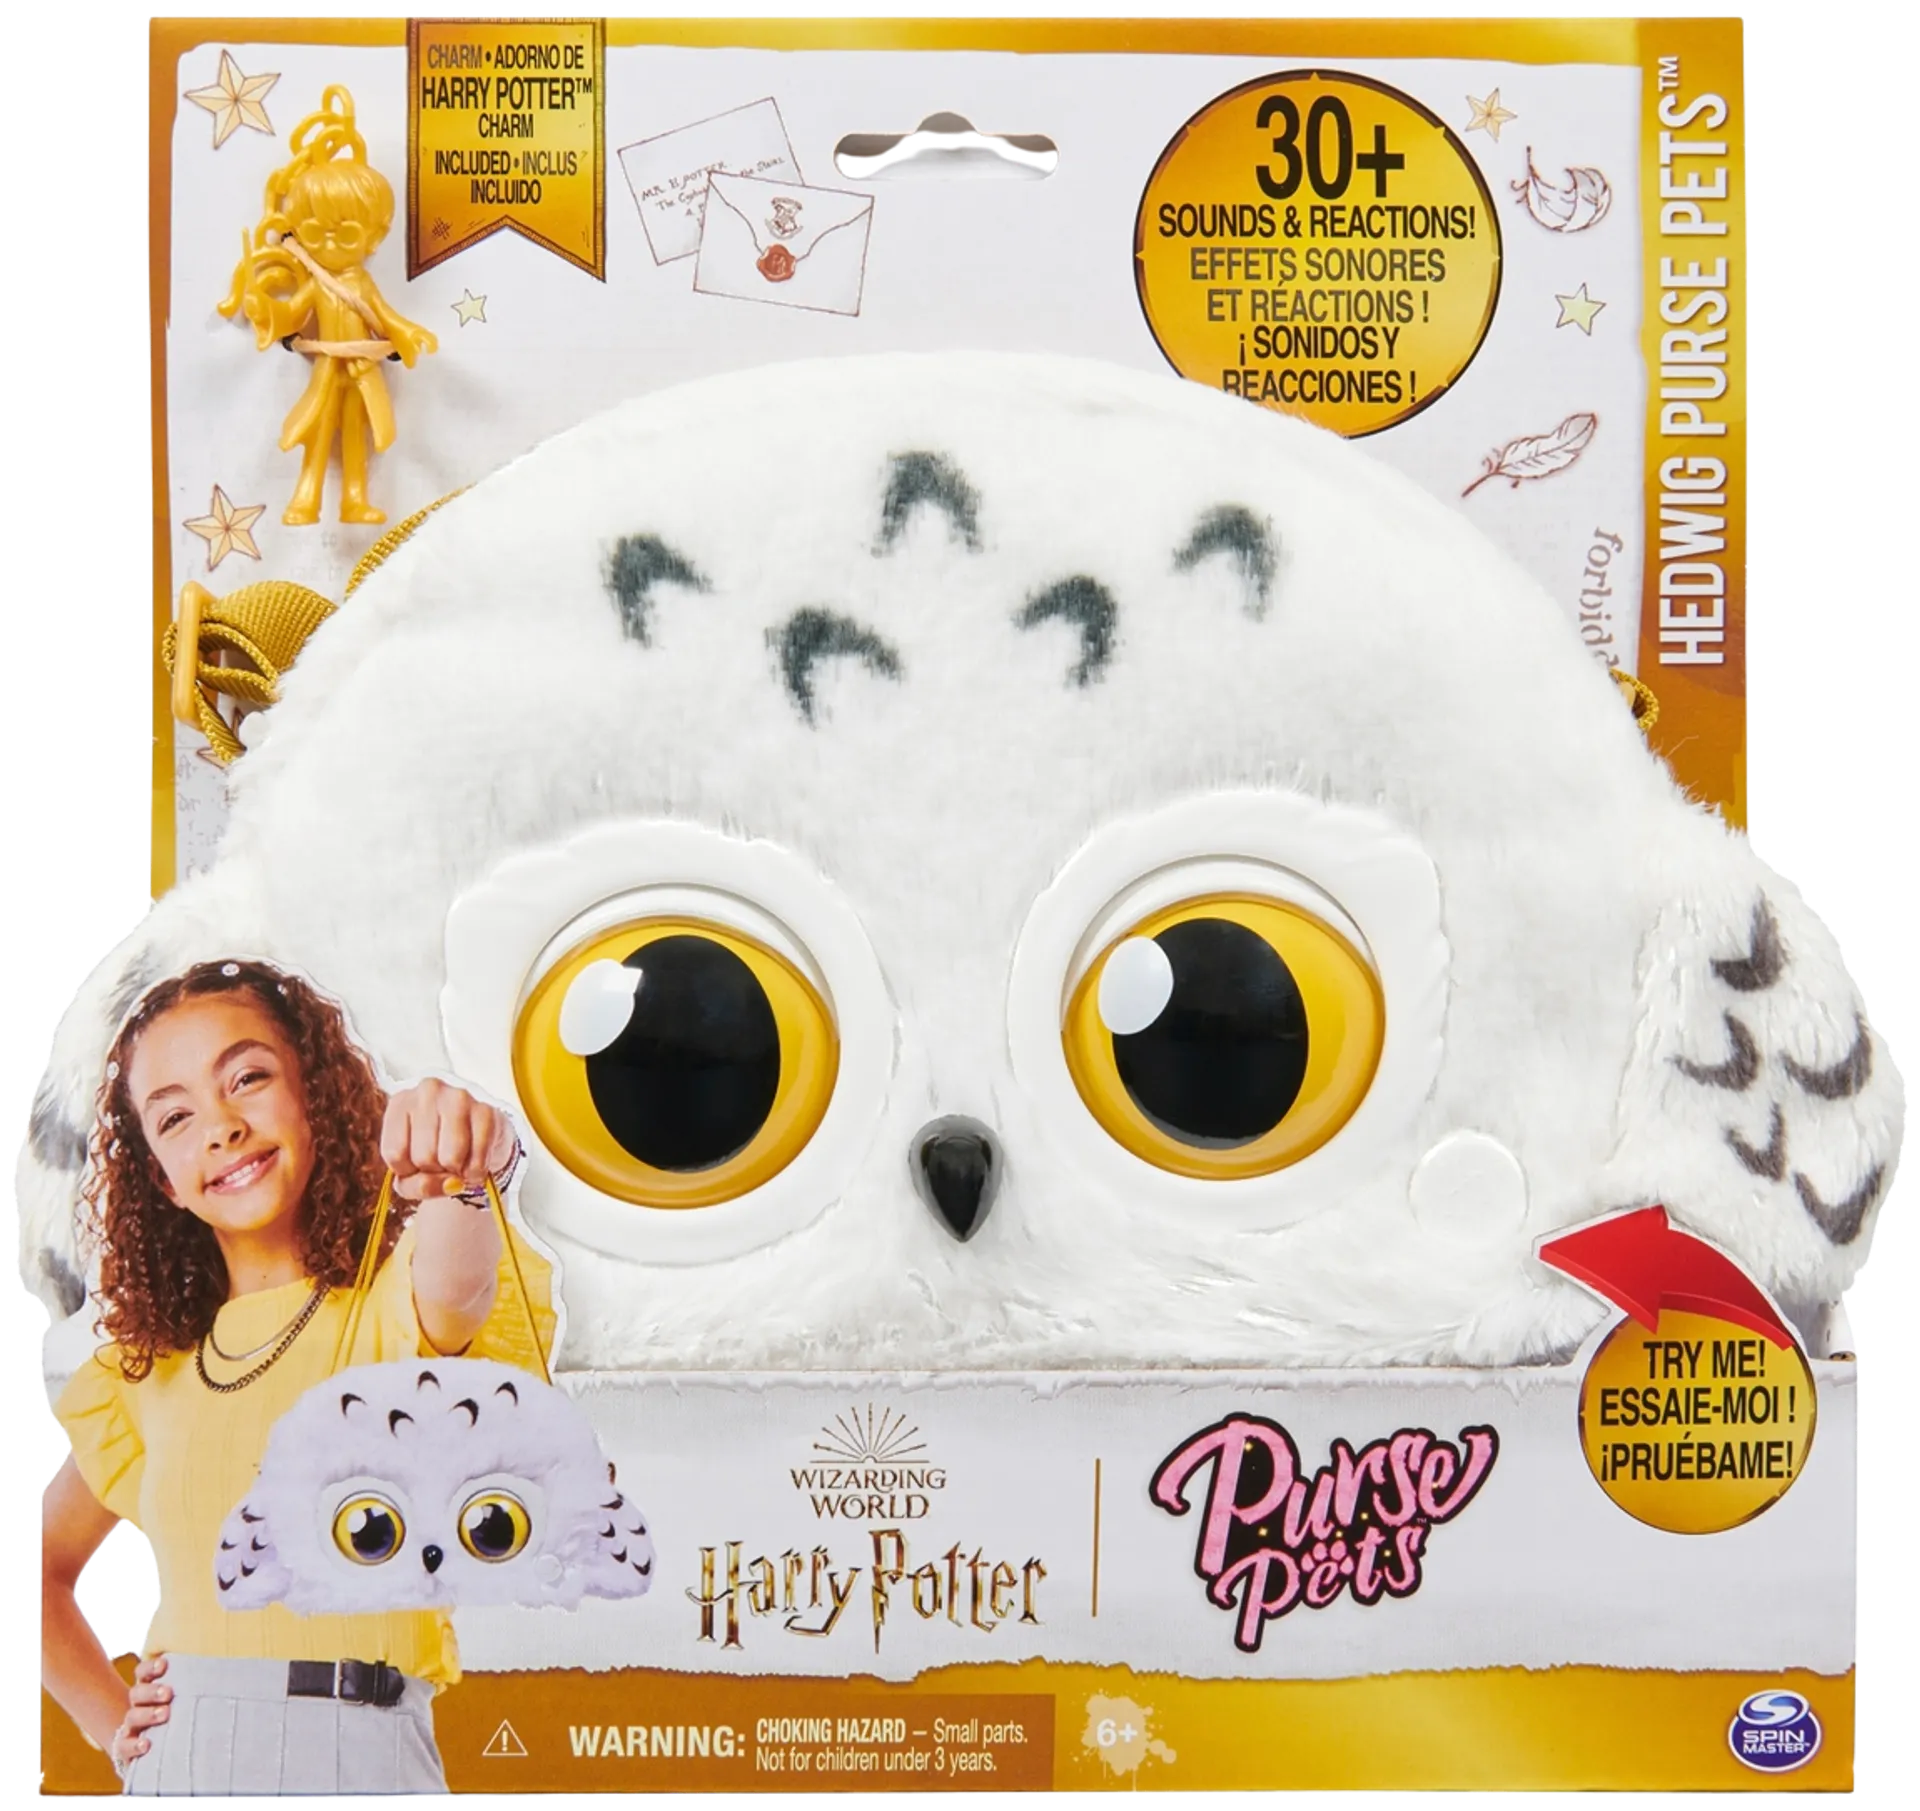 Wizarding World Hedwig Purse Pets - 1